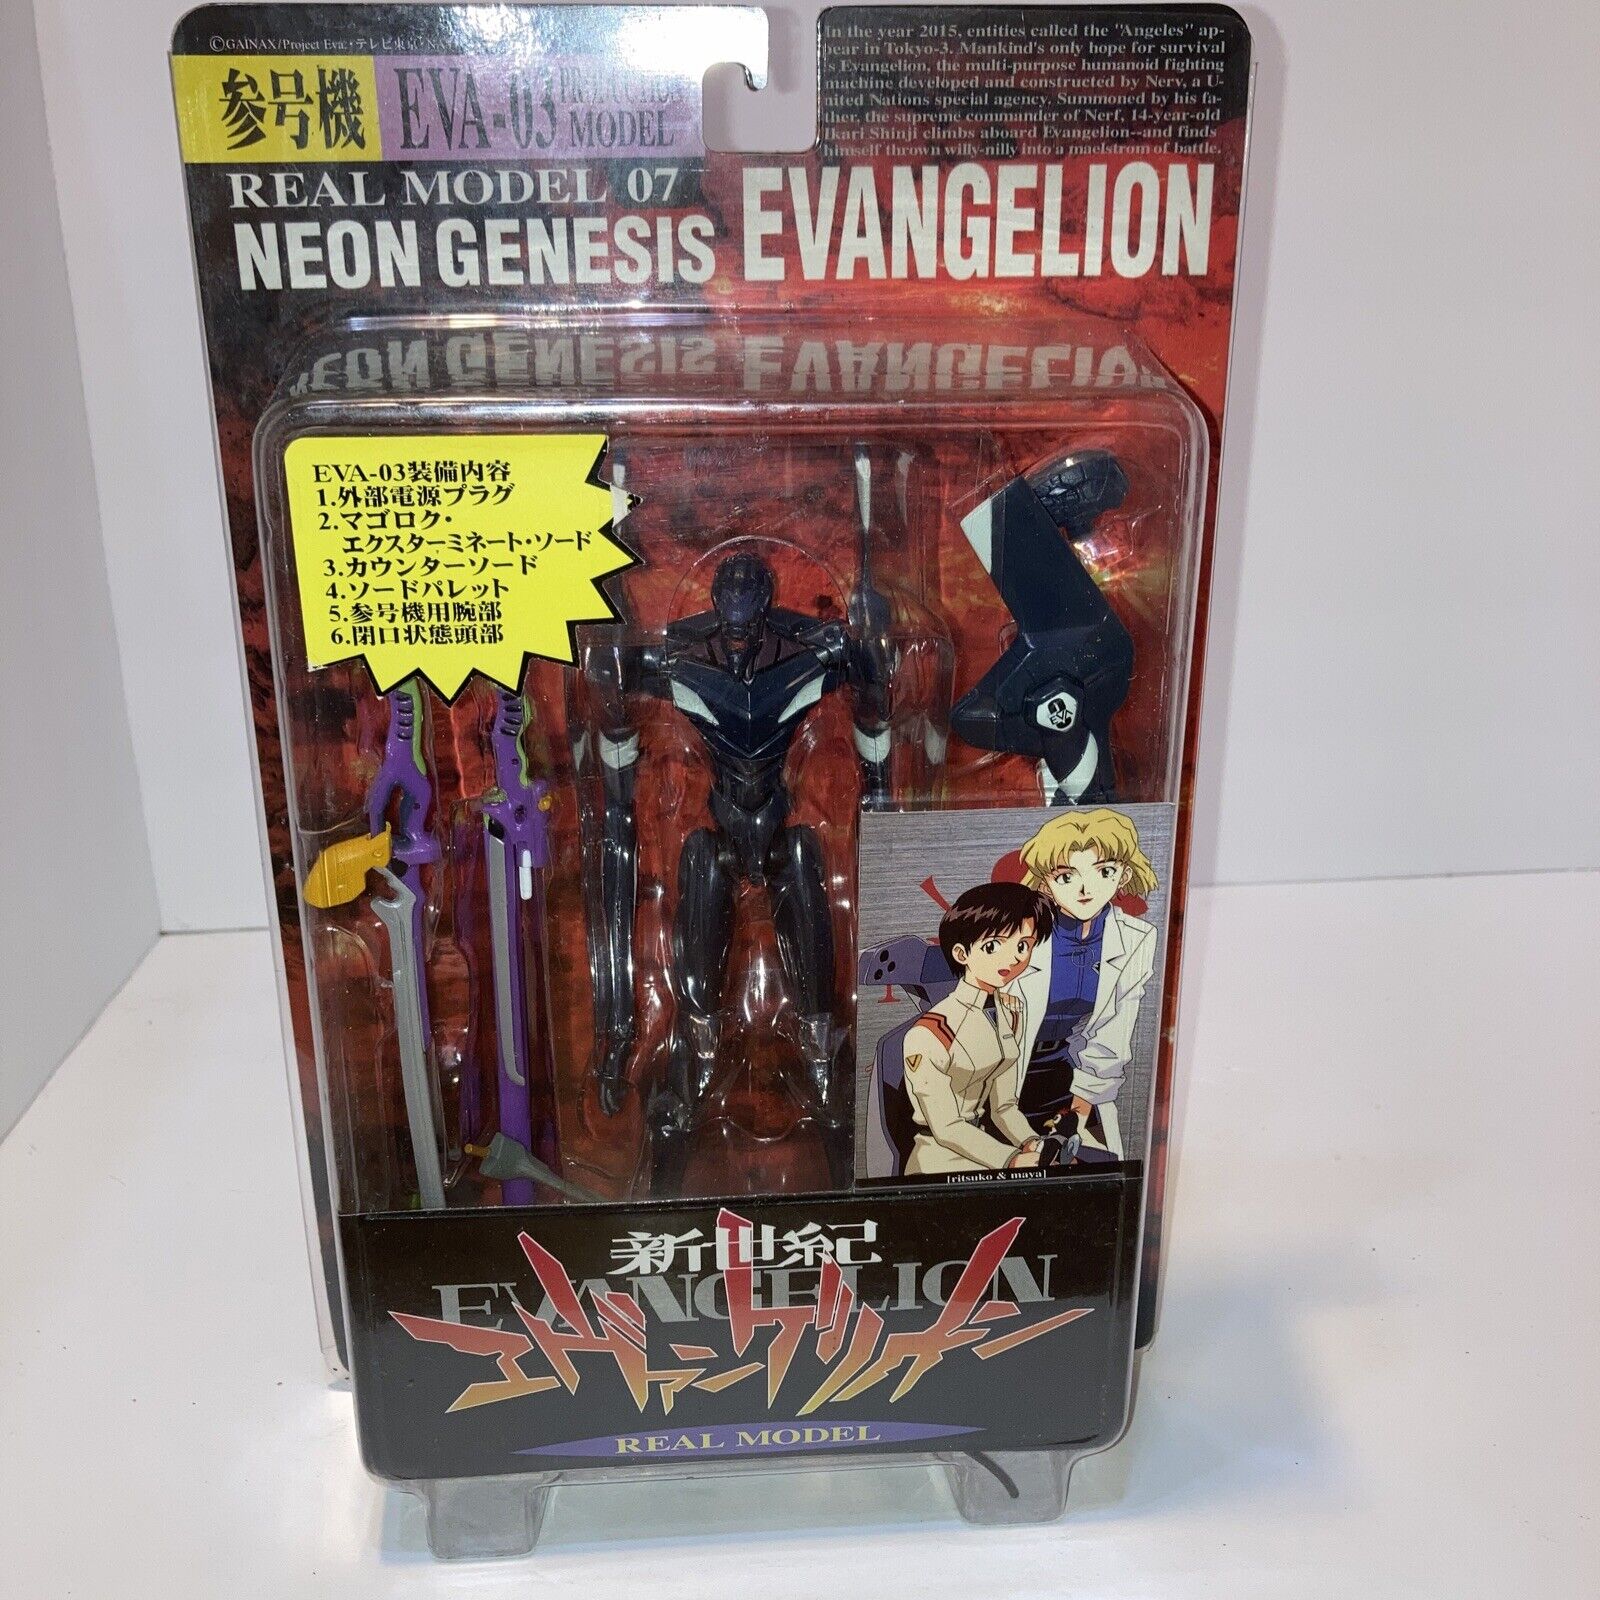 Evangelion Approach Neon Genesis Evangelion Real Model Series 07 Figure